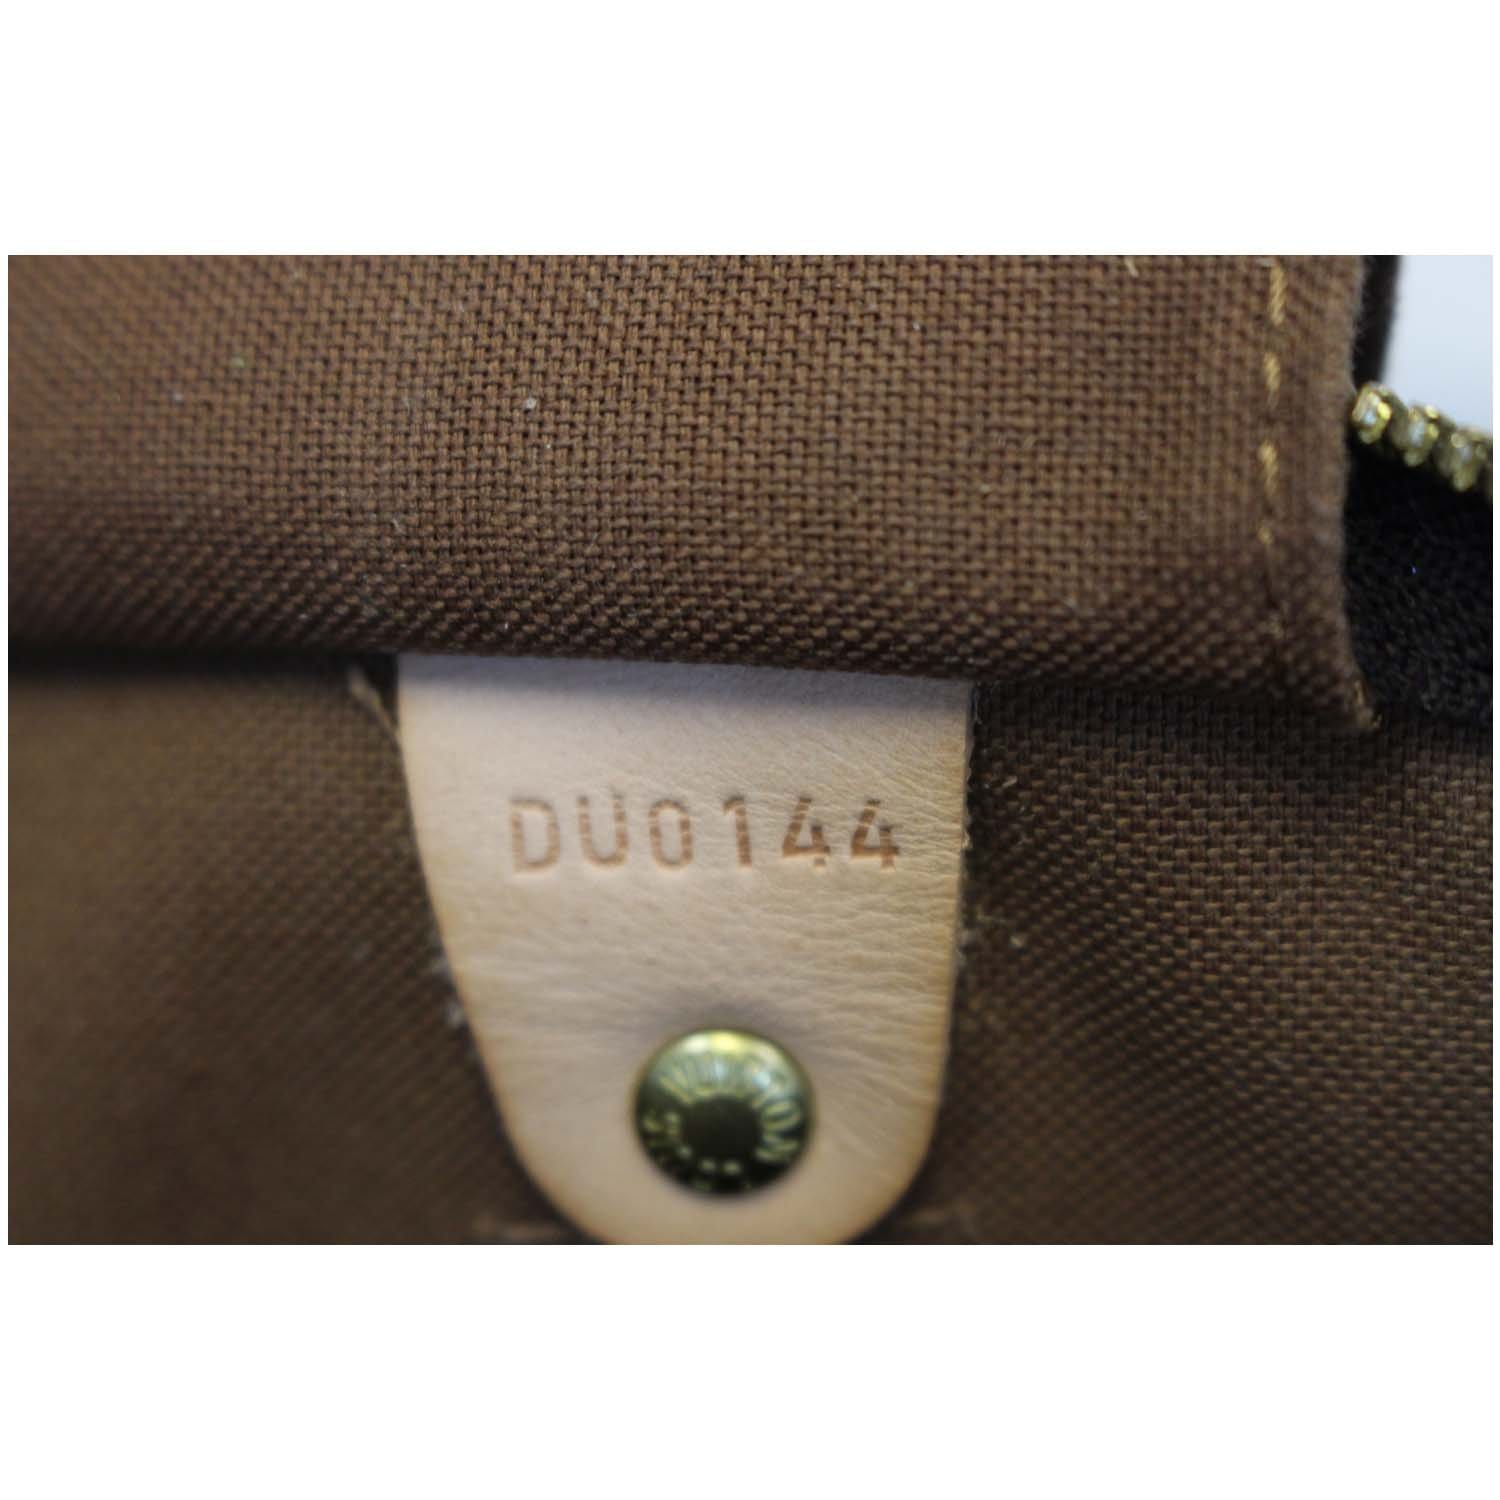 Personal Shopper 🇬🇧 on Instagram: “🗣New Louis Vuitton” #louis